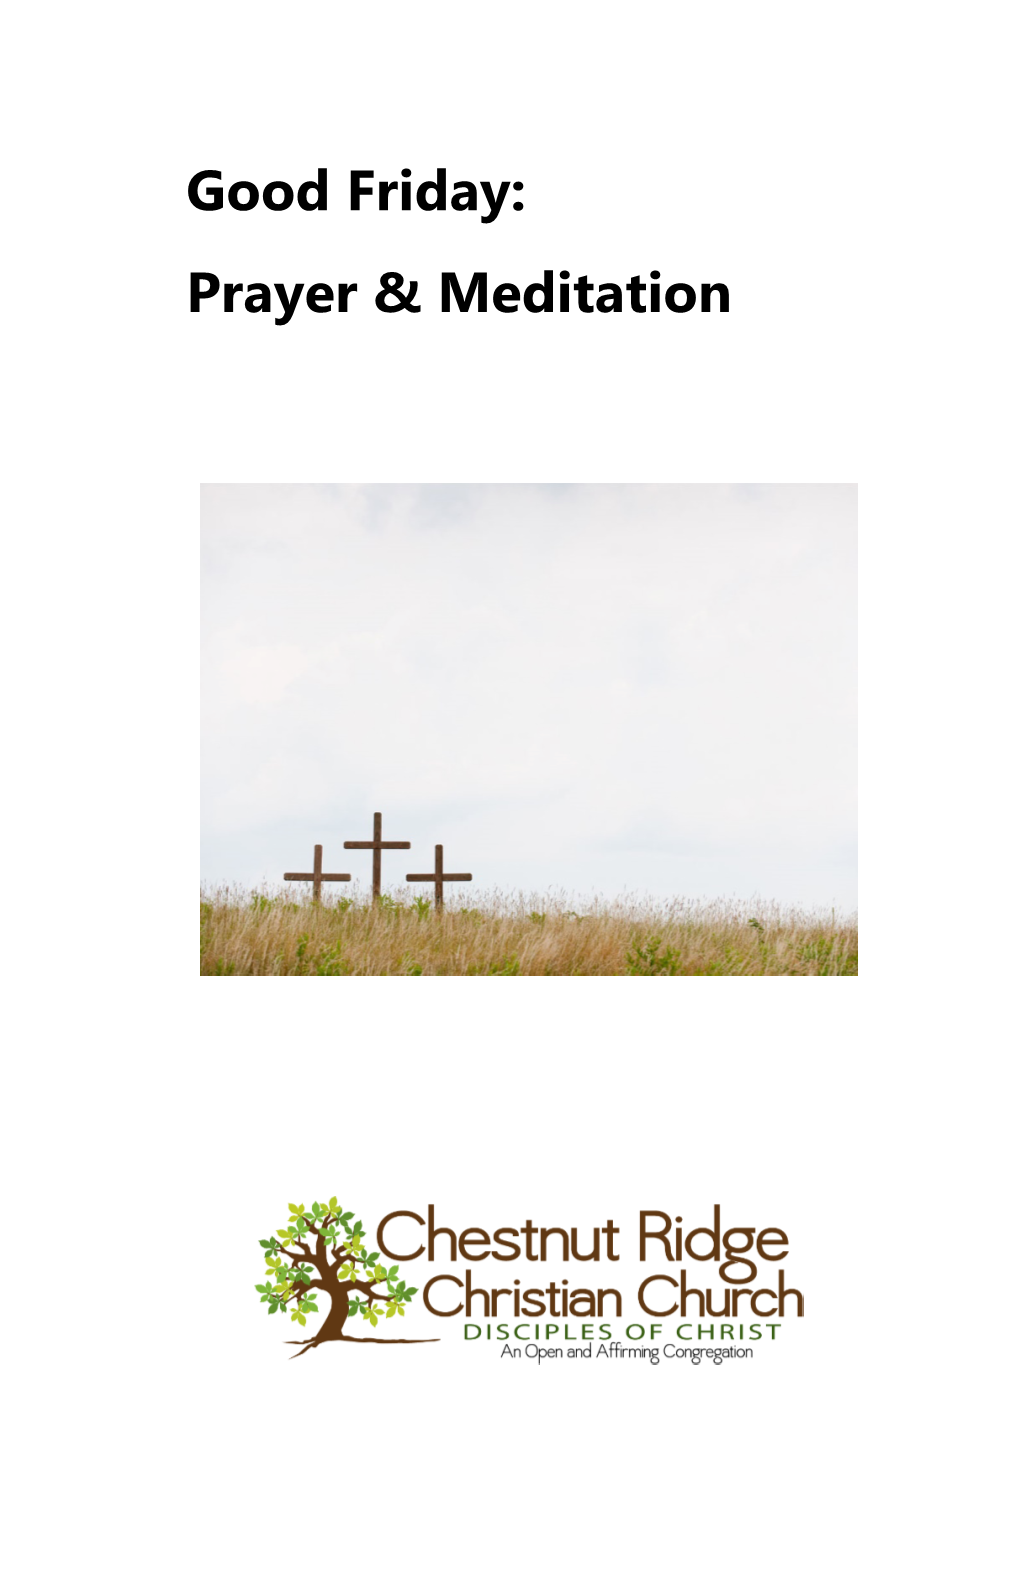 Good Friday: Prayer & Meditation